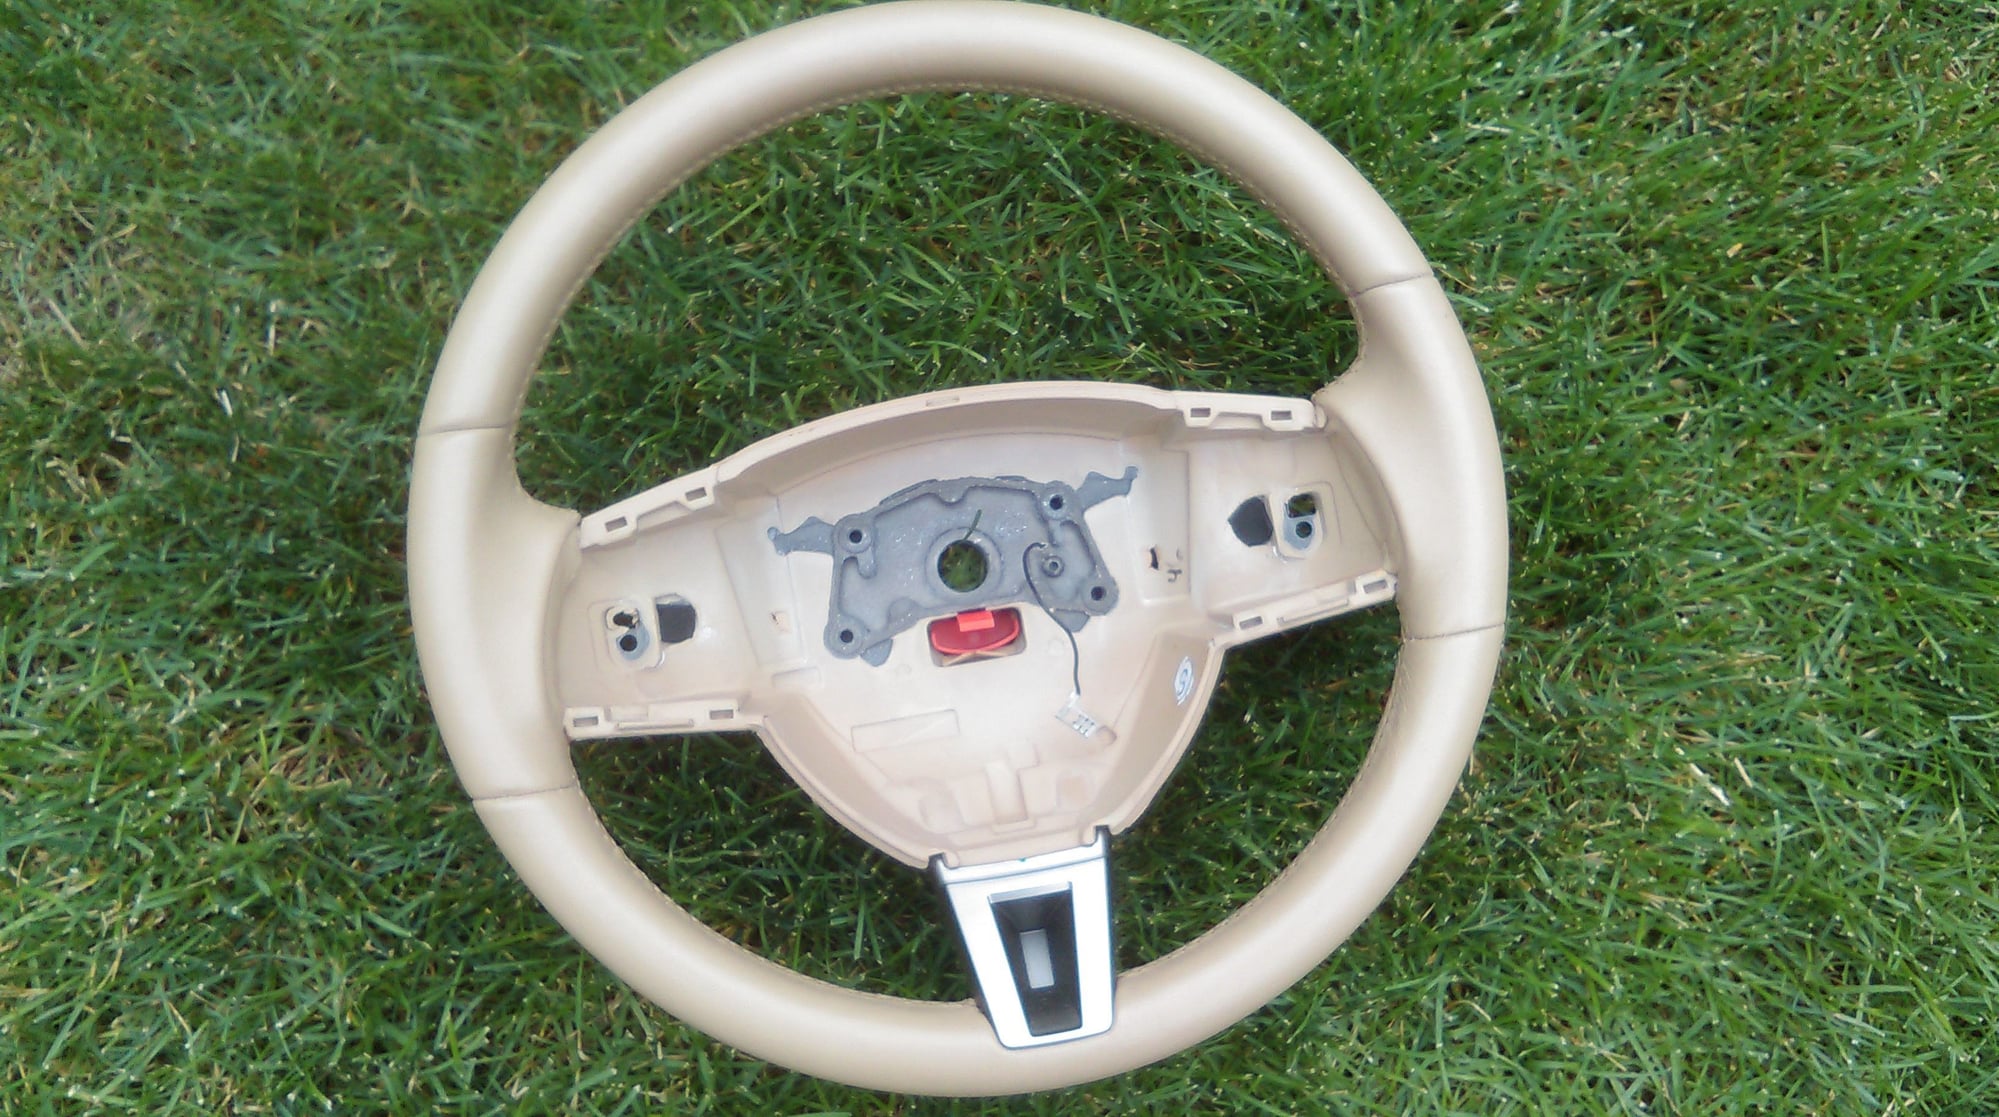 Steering/Suspension - Xk steering wheel, saddle - New - All Years Jaguar XK - Deer Park, NY 11729, United States